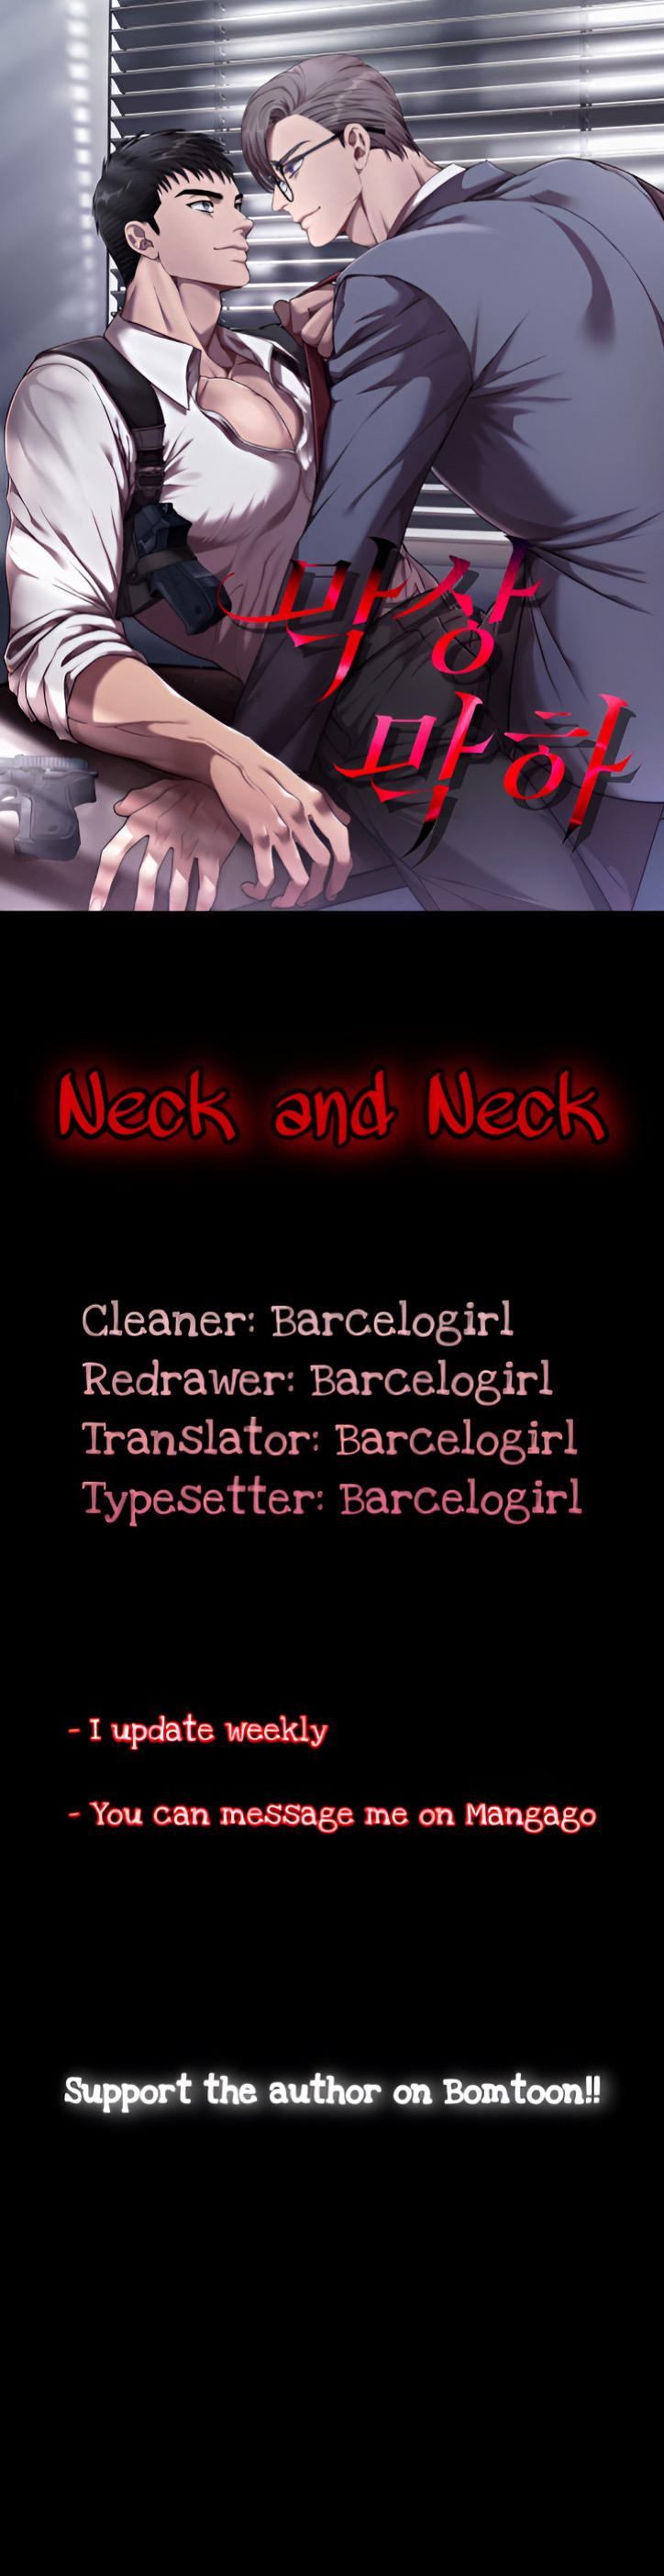 Neck and neck bl manga